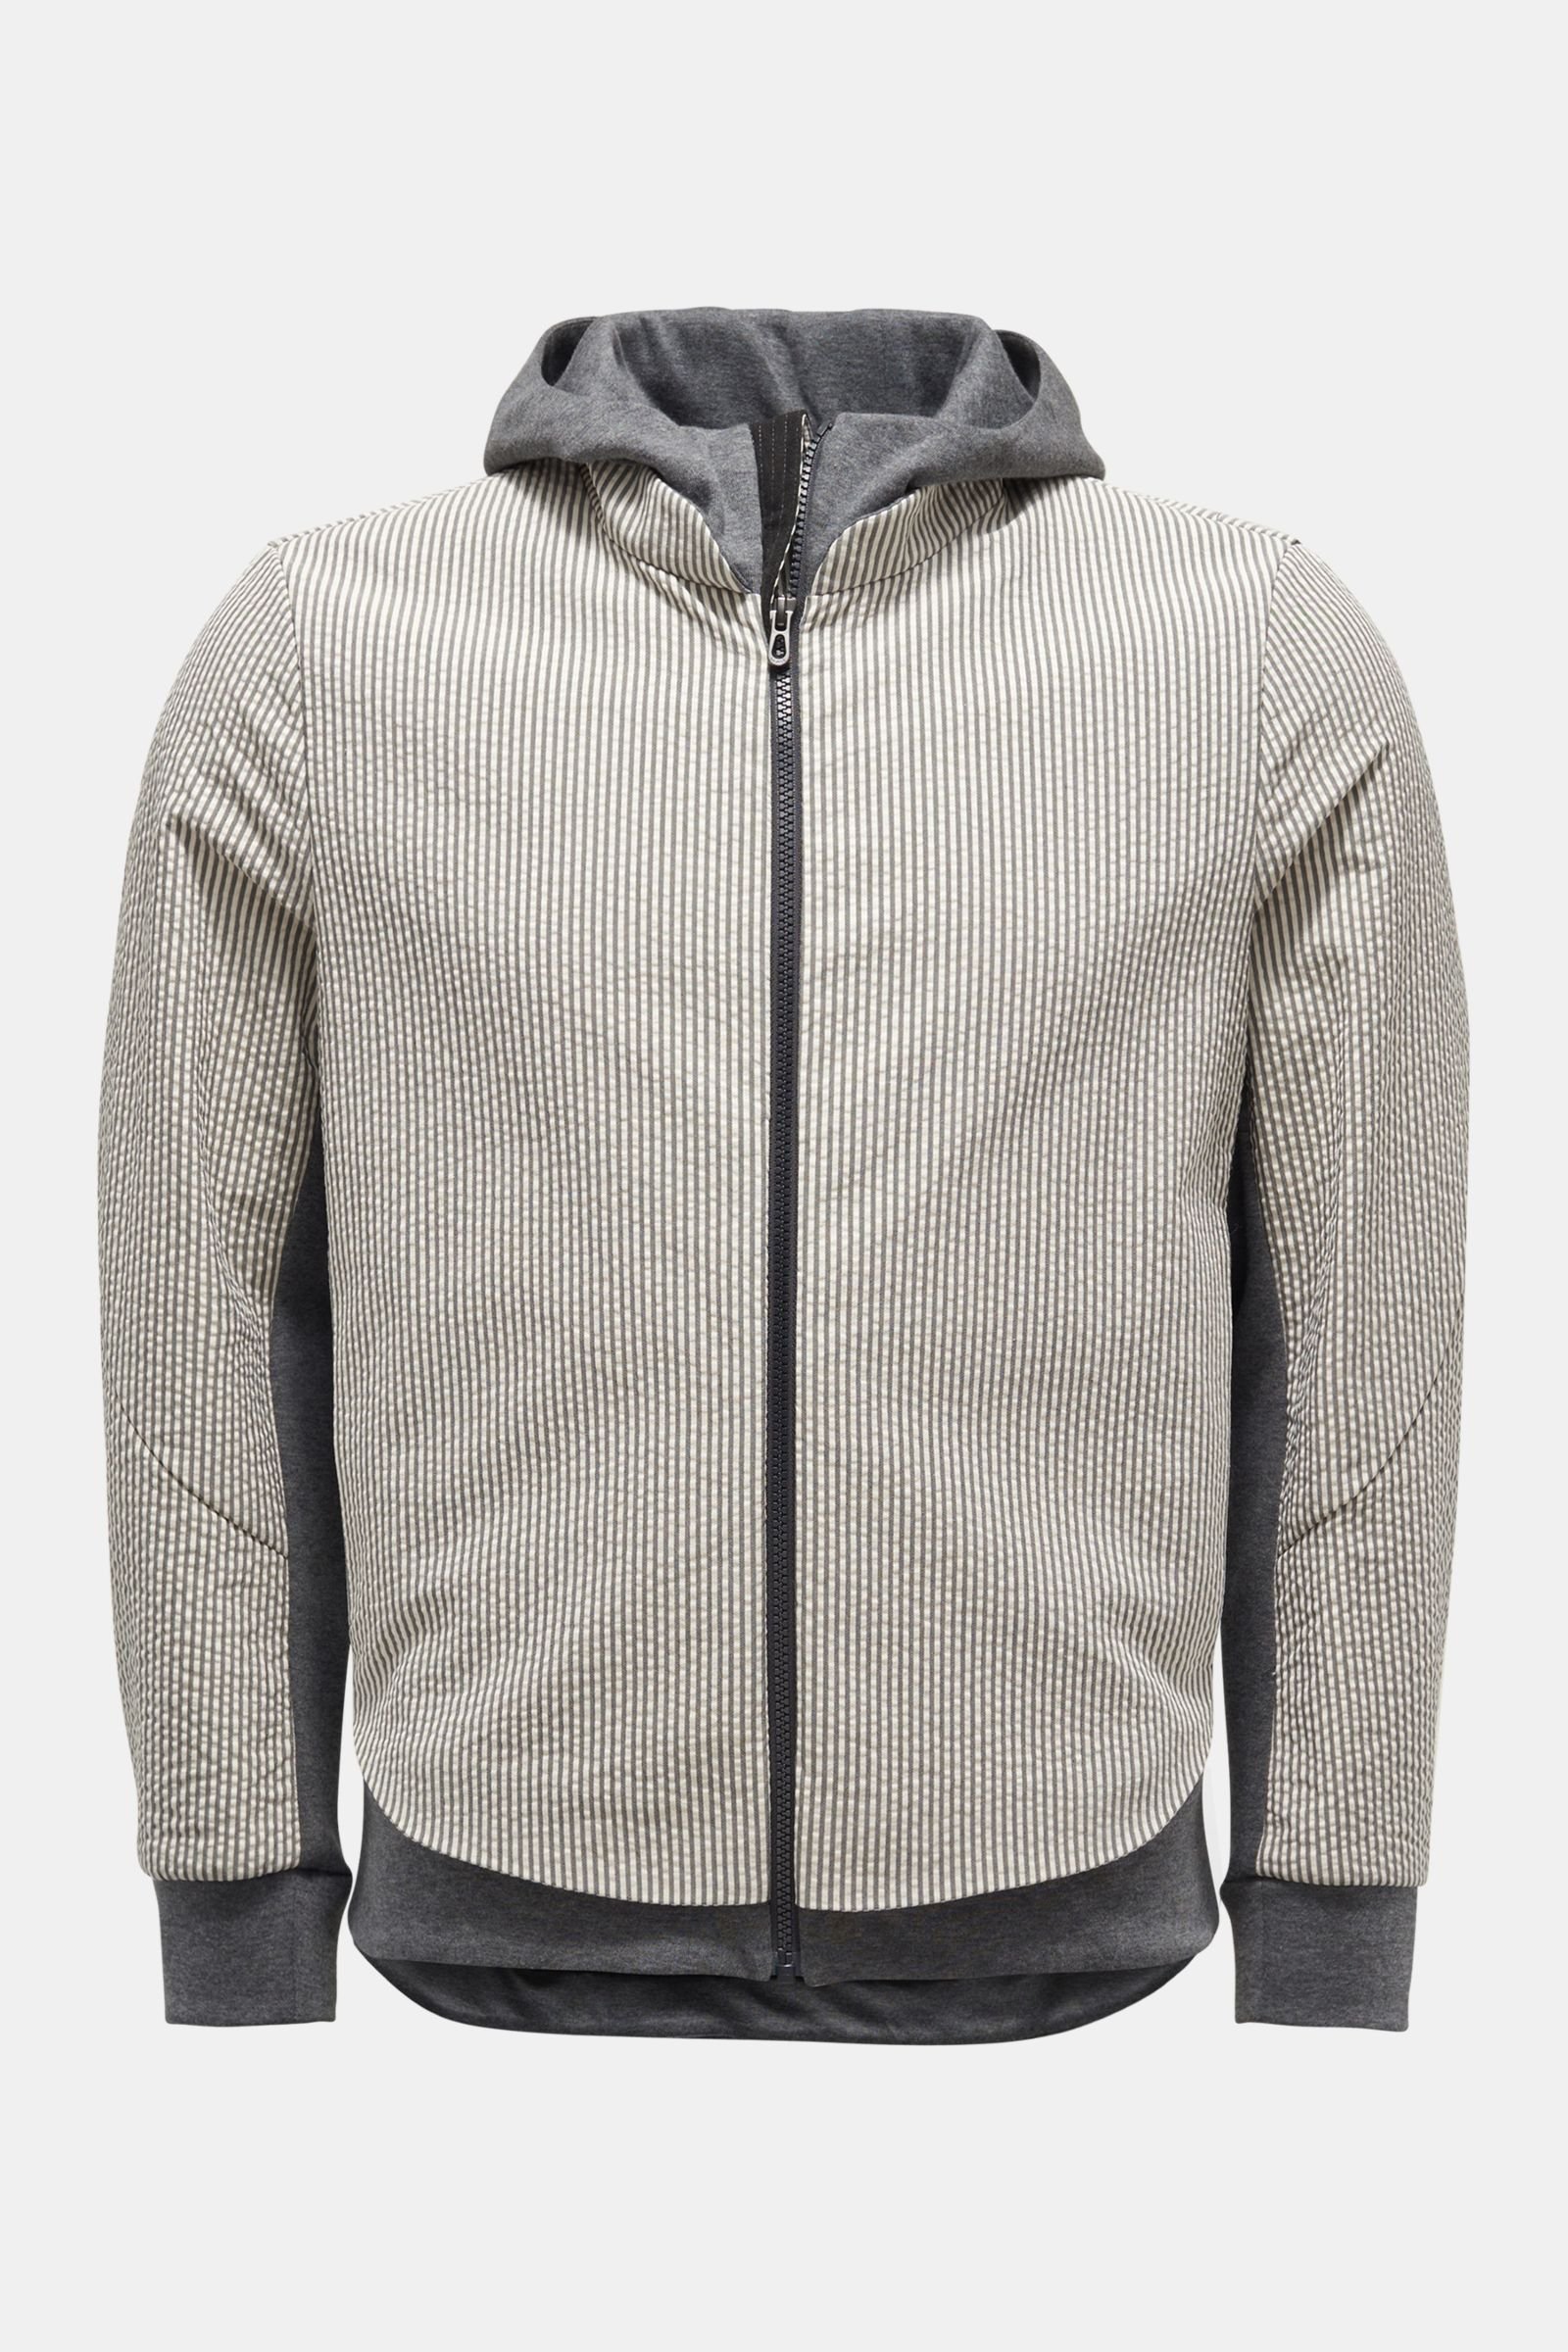 Seersucker sweat jacket 'Tailorhood N55' dark grey/off-white striped